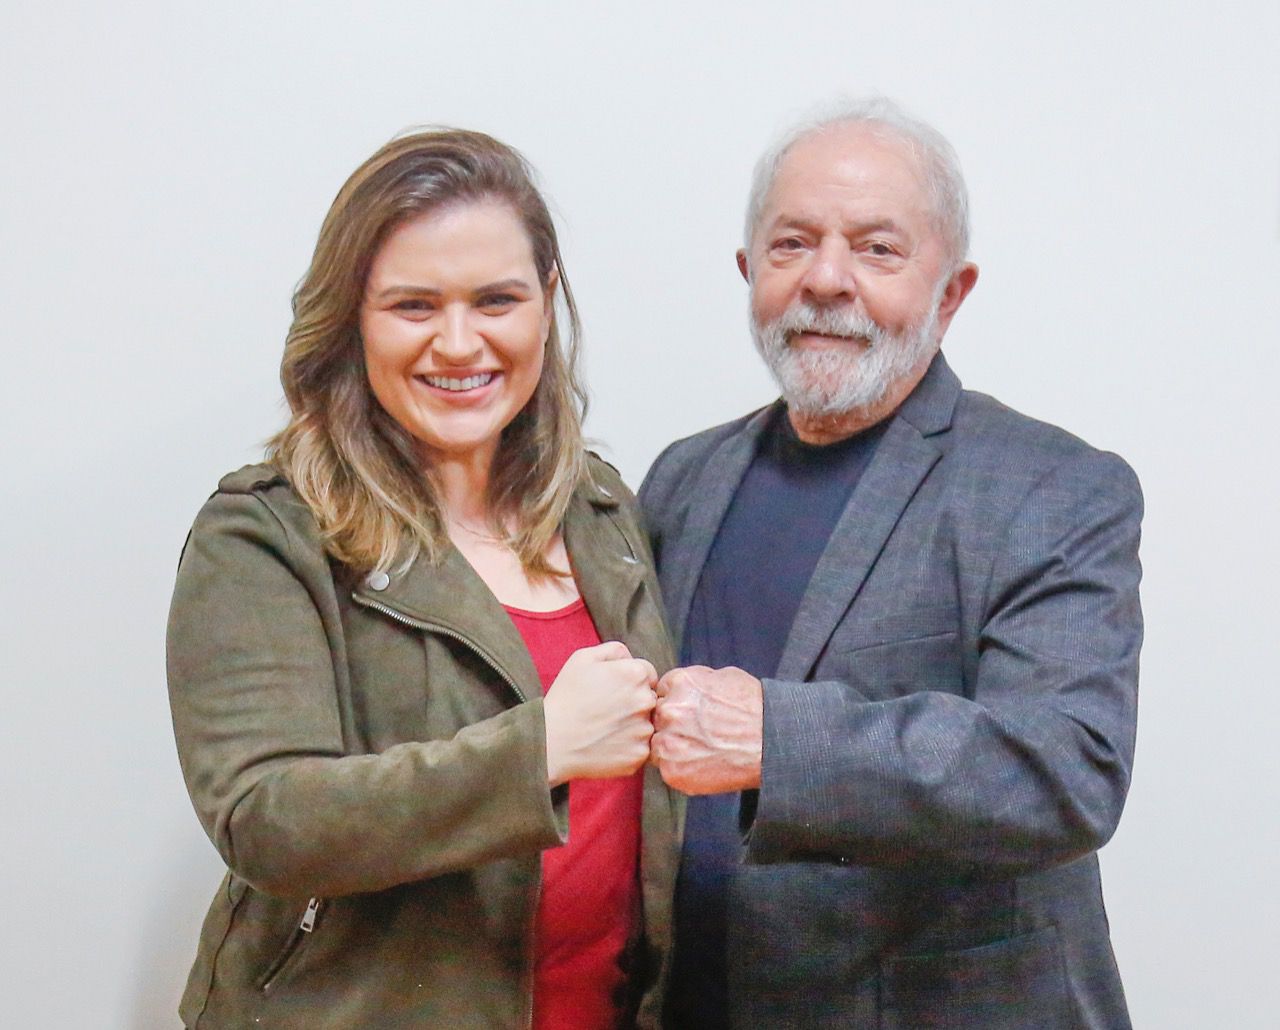 Federal deputy Marília Arraes (PT-PE) and former president Lula